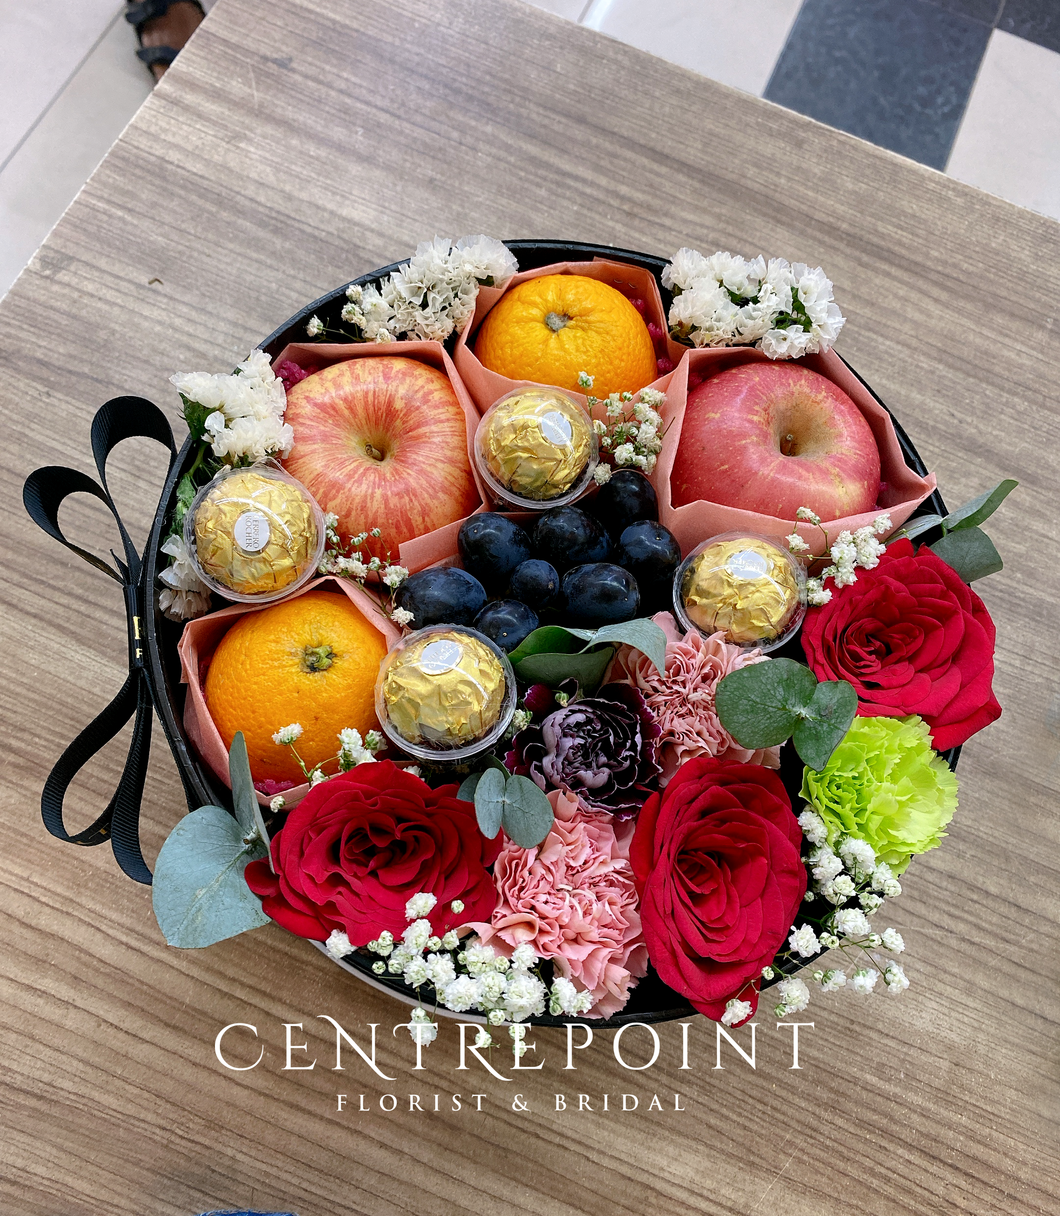 Premium Fruit & Flower Box 011 (RM 150.00)